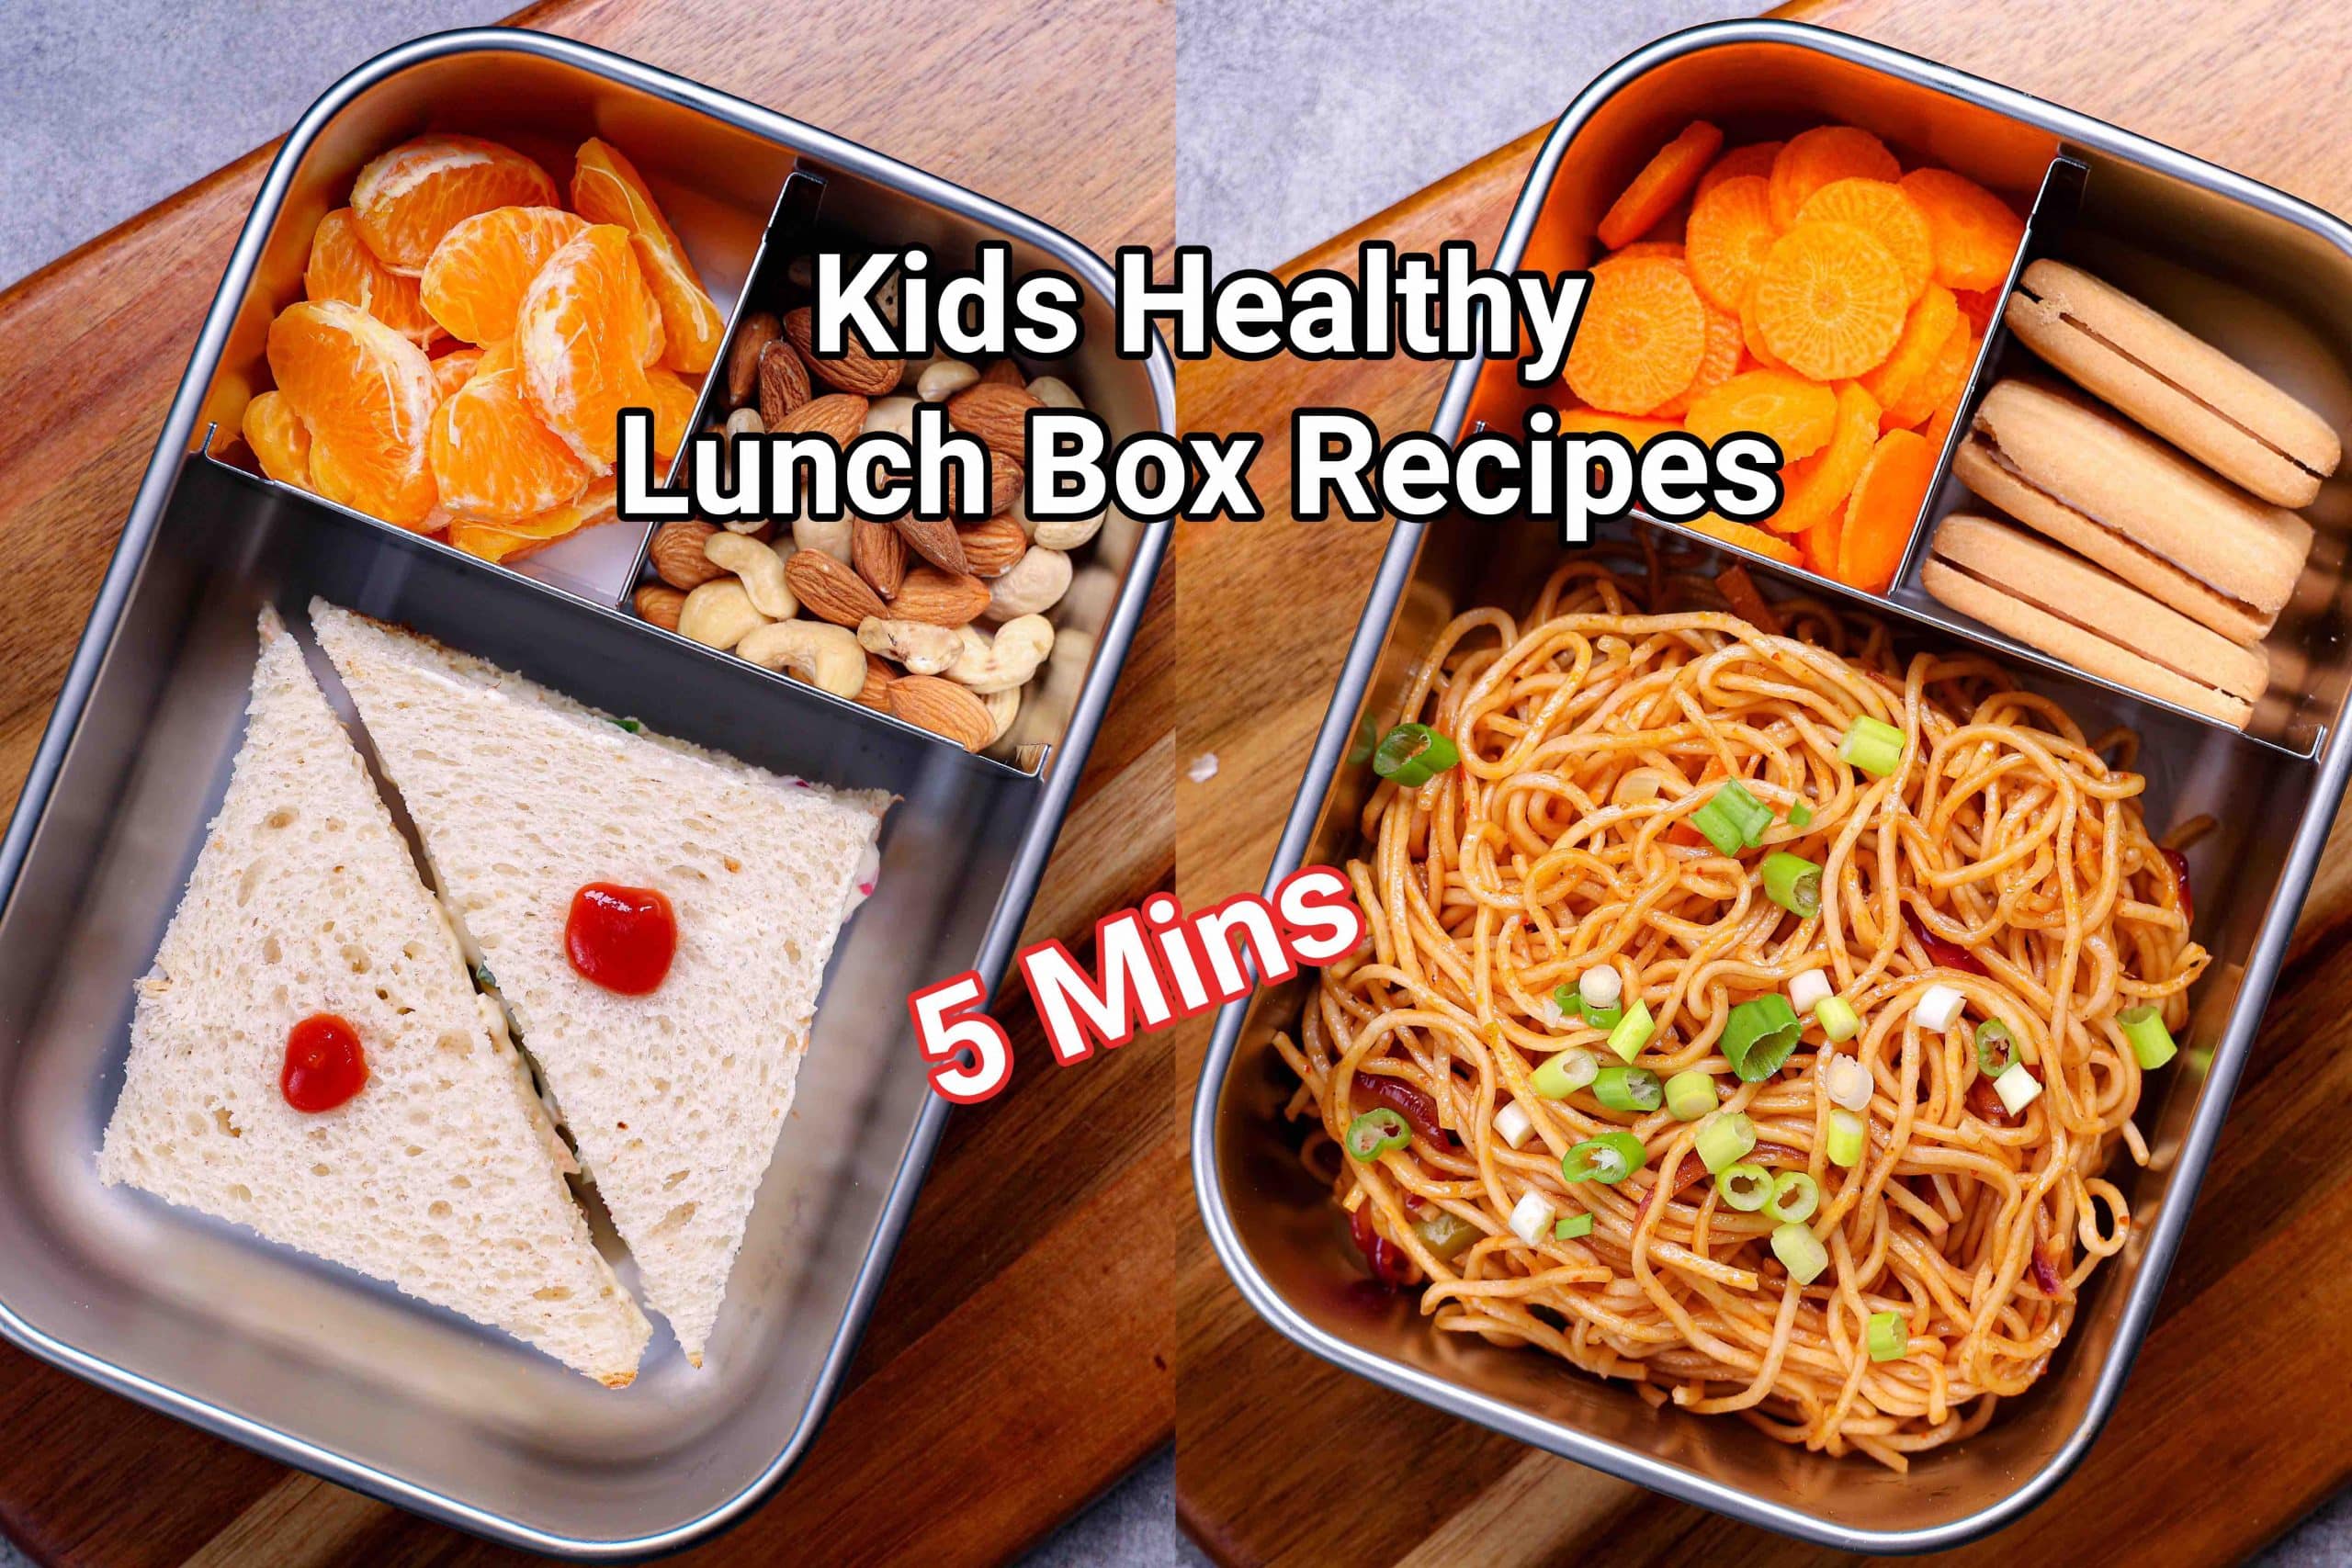 Snack Box Tips for Kids